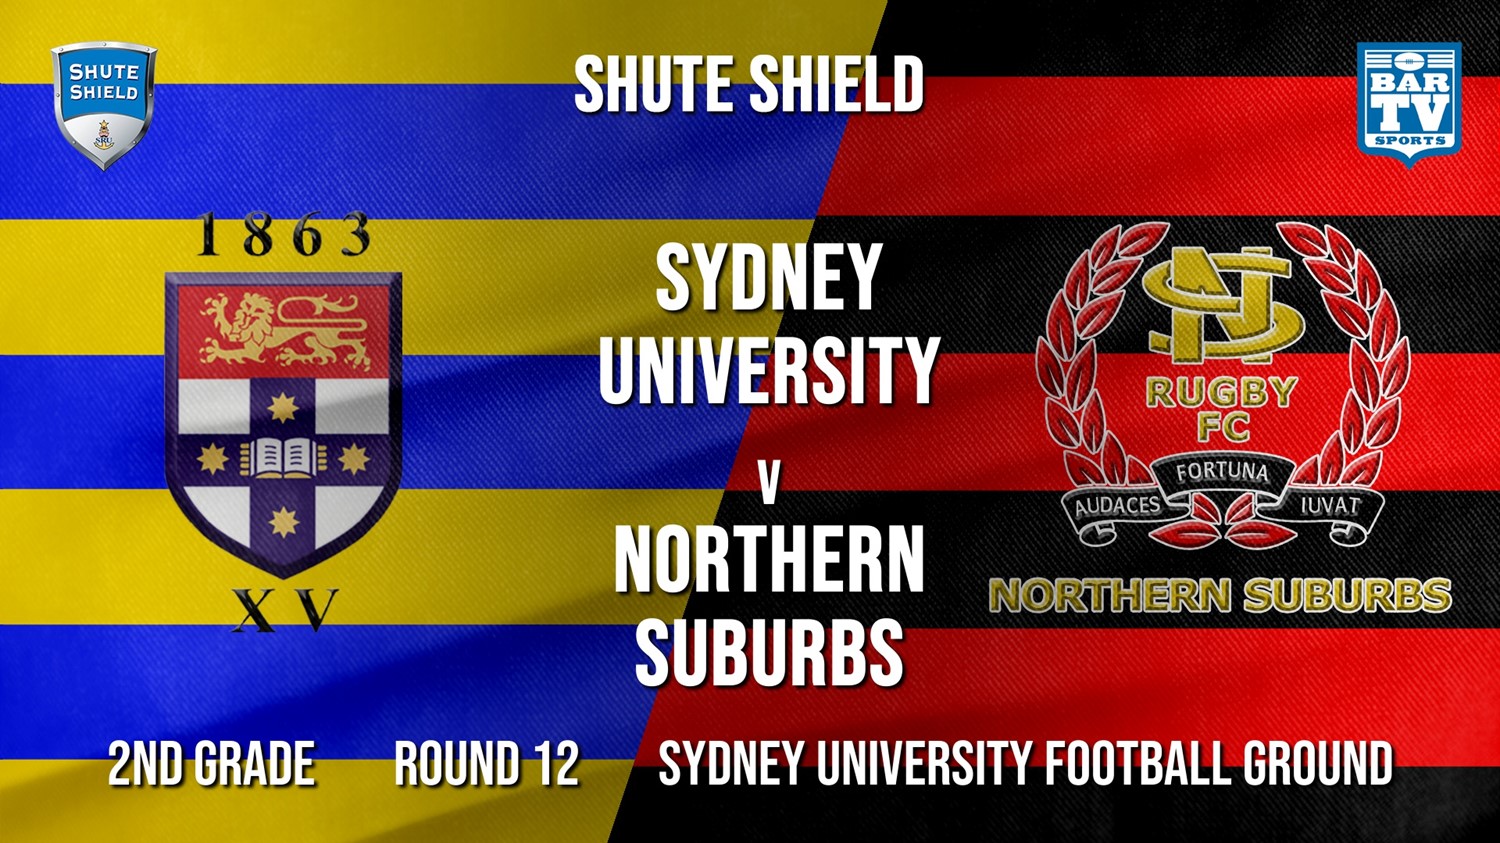 Shute Shield Round 12 - 2nd Grade - Sydney University v Northern Suburbs Minigame Slate Image